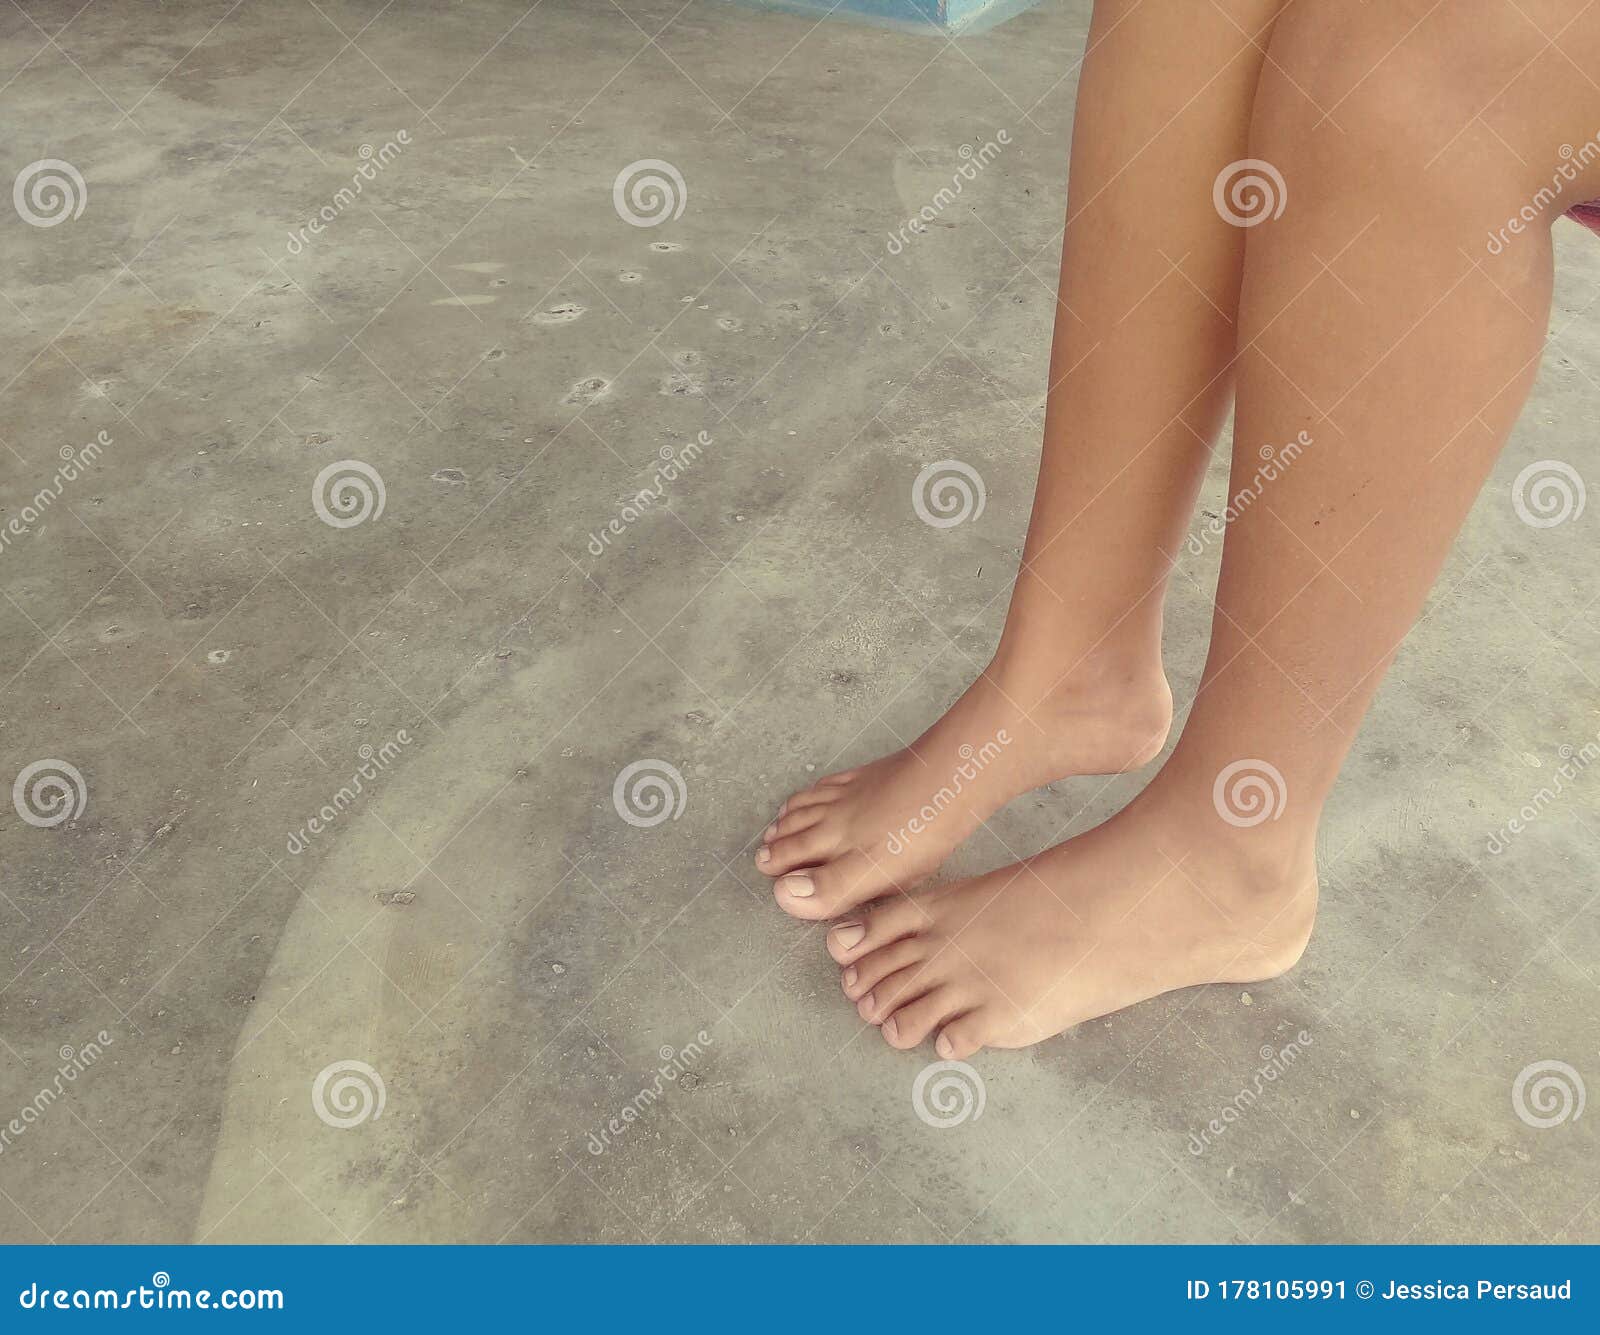 brian estabrooks add photo most beautiful feet ever